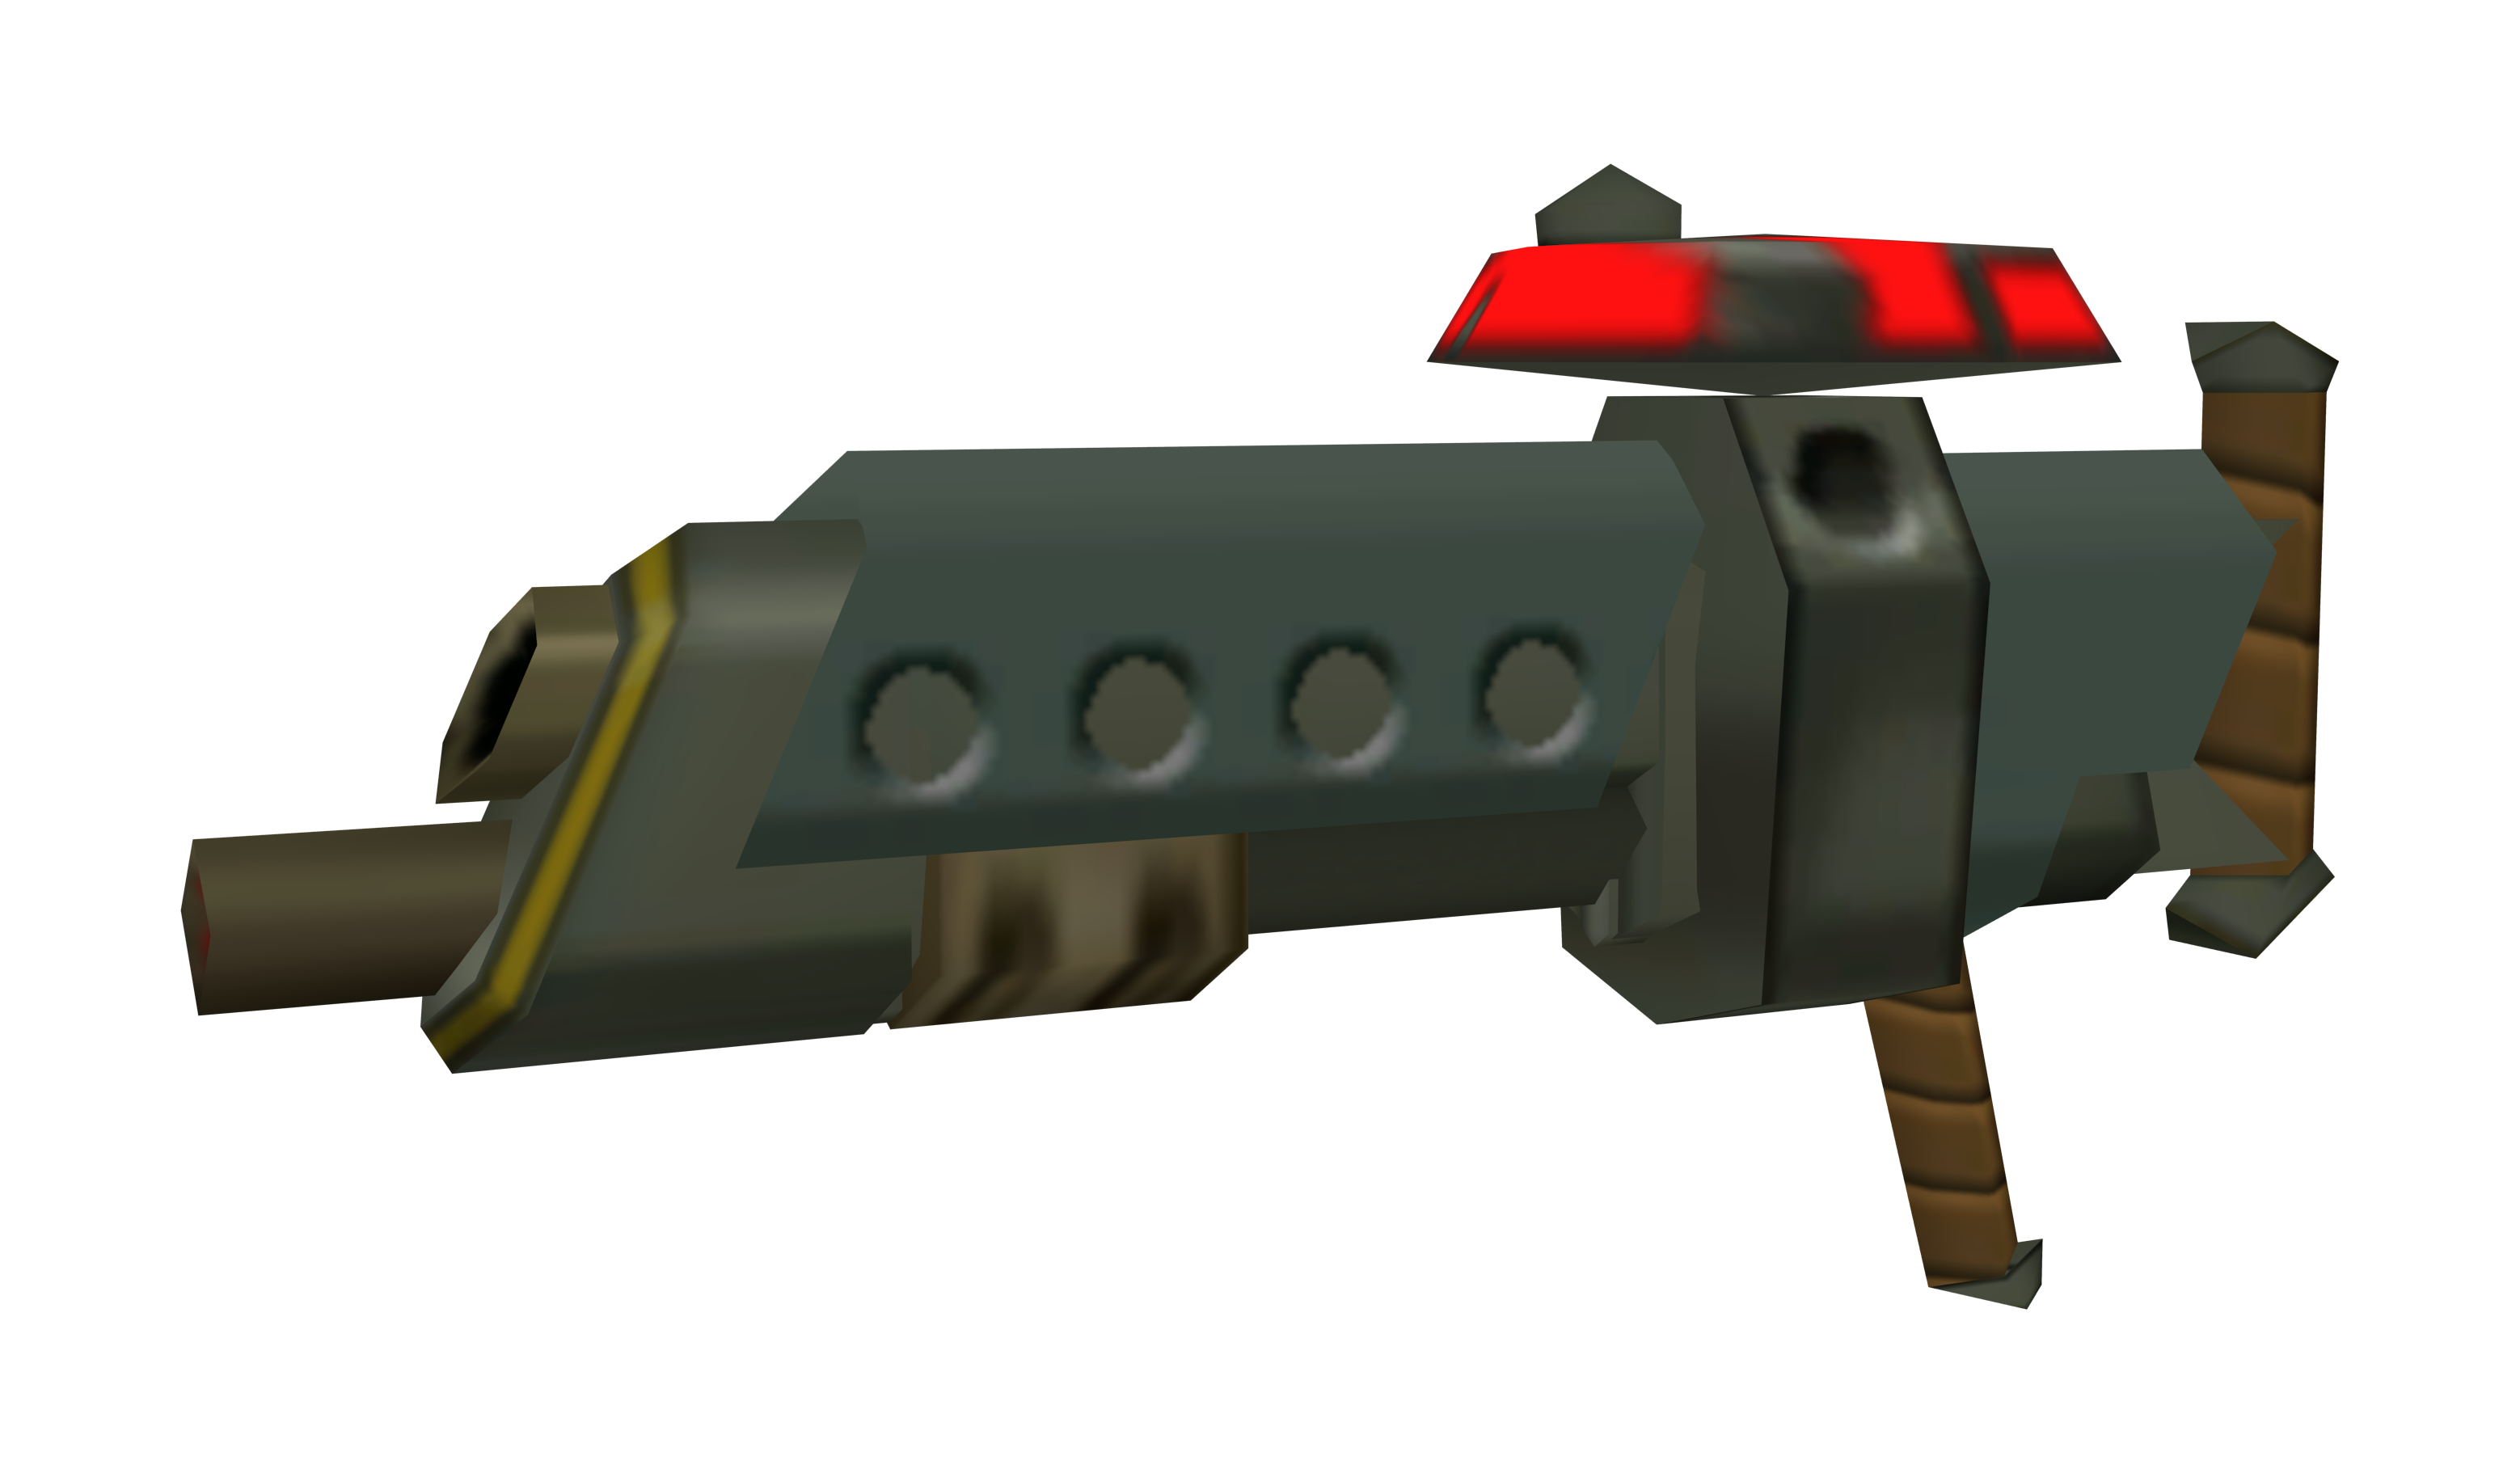 a real scatter gun